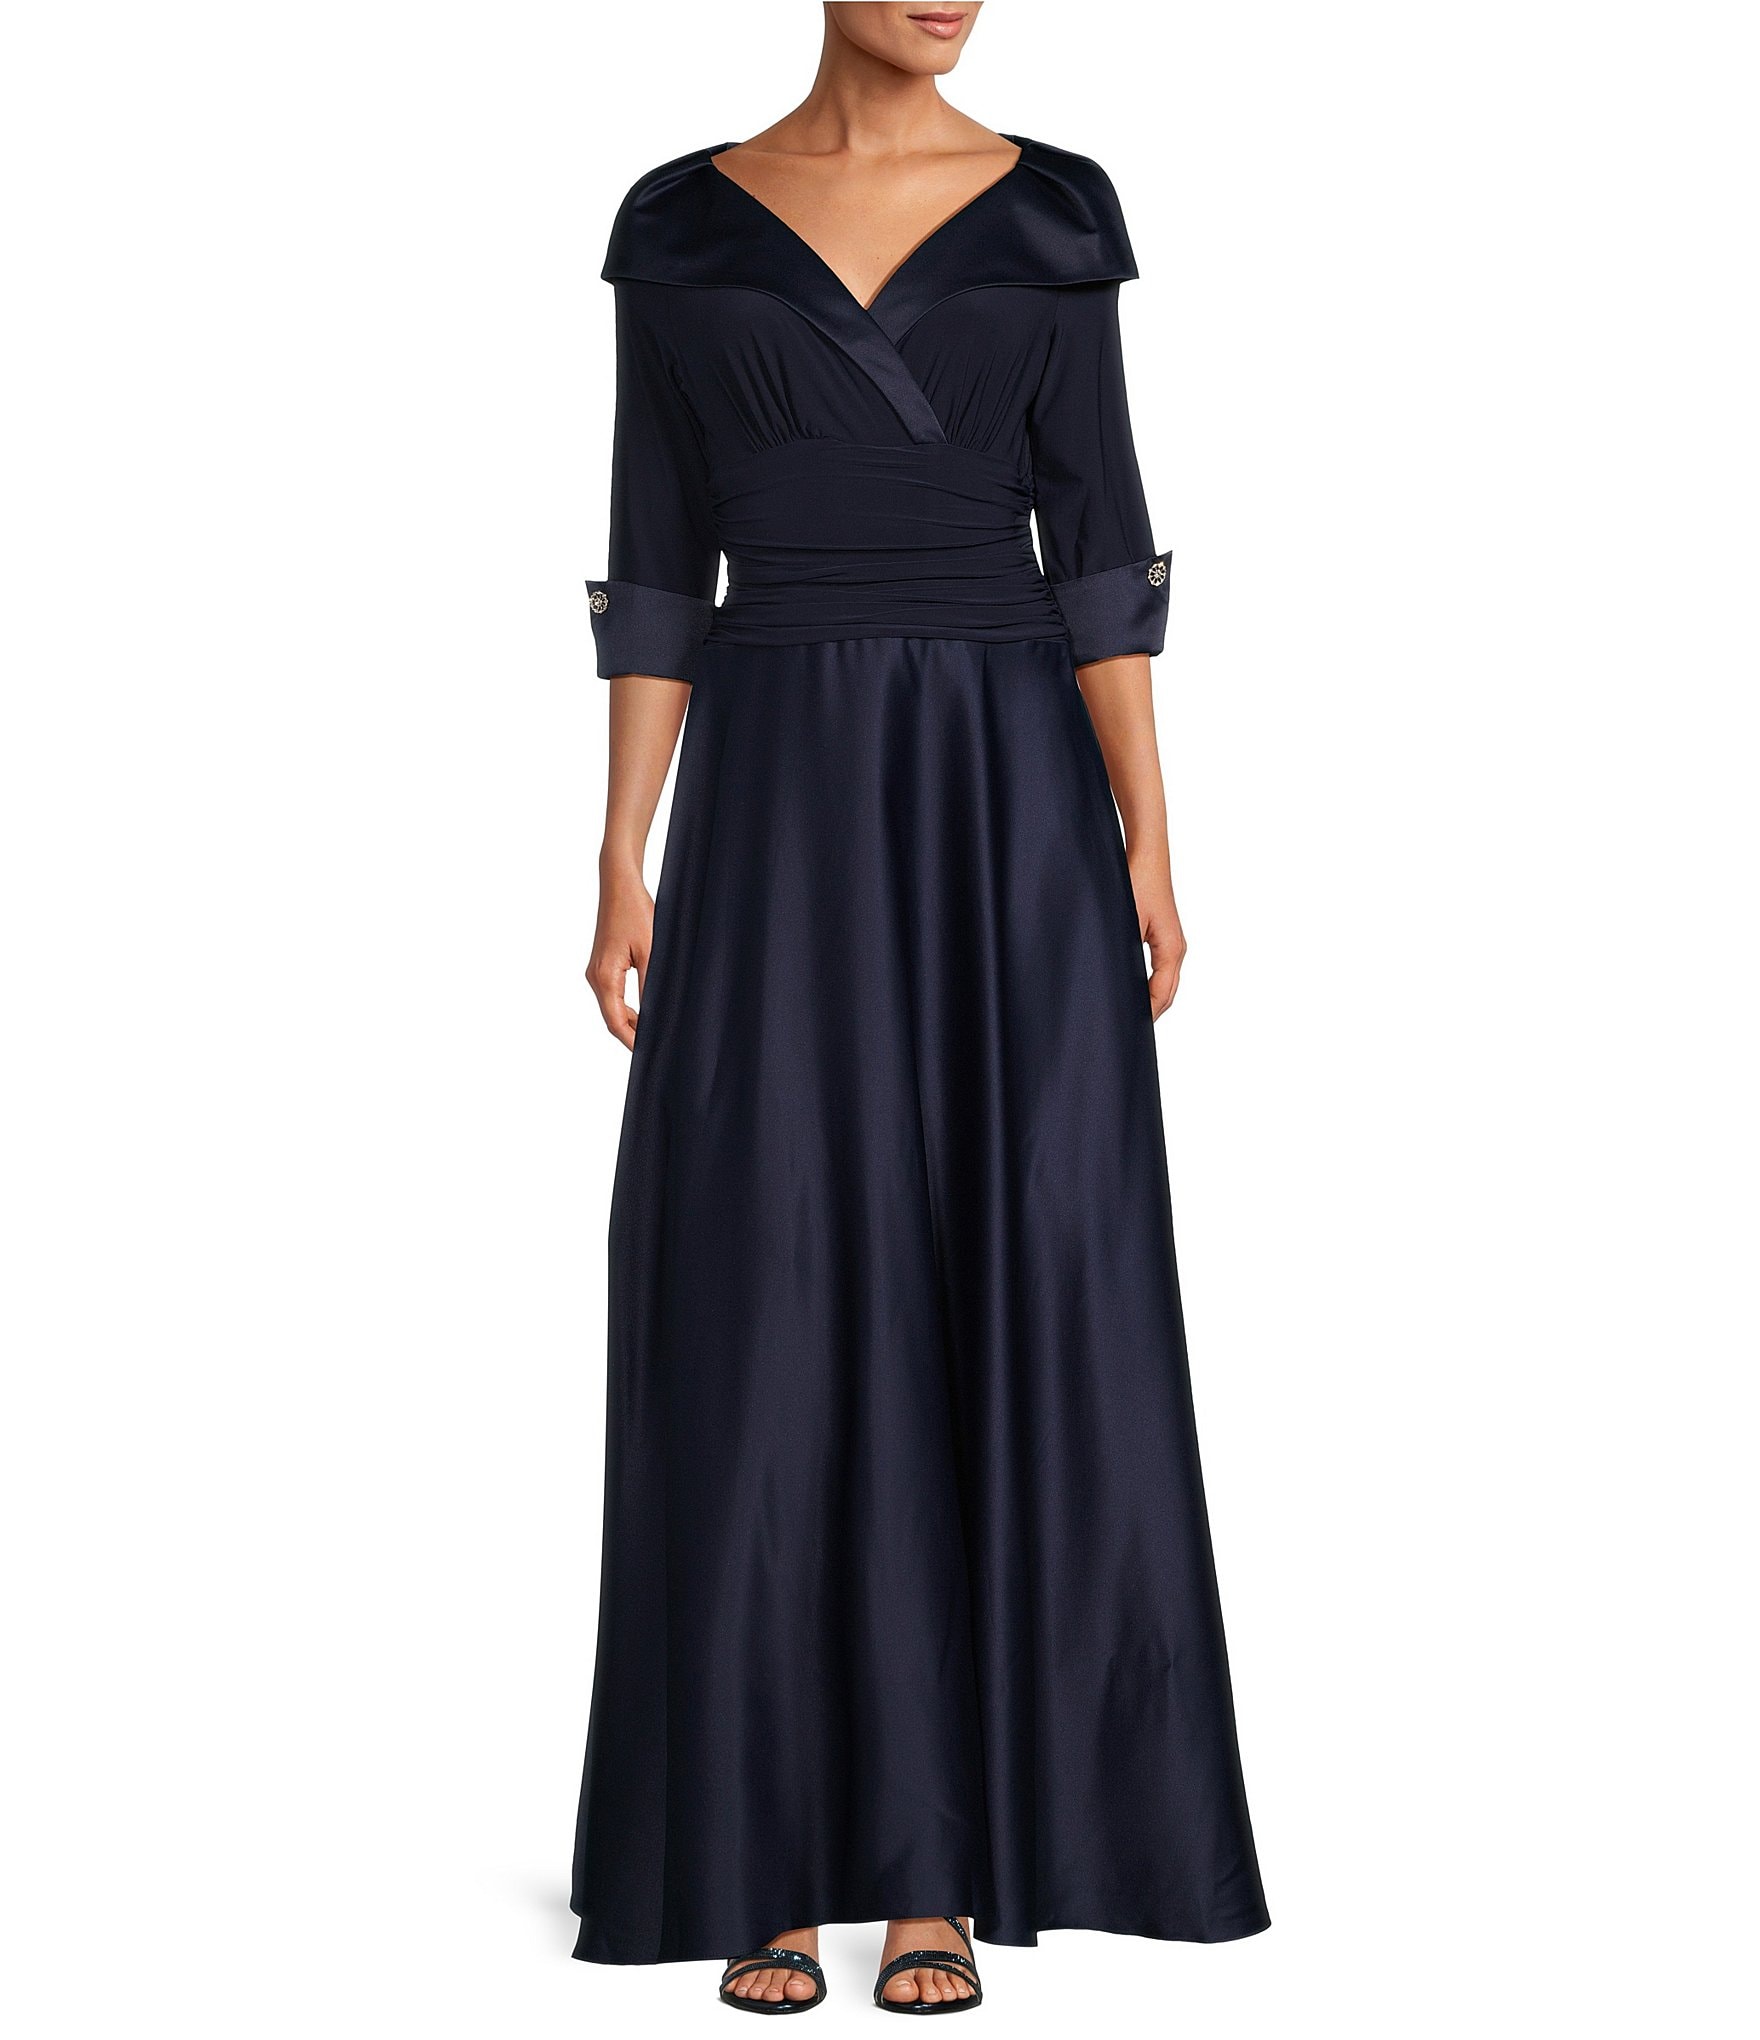 Jessica Howard Soutache Floral Lace Round Neck Sequin Bodice Satin 3/4  Sleeve Tie Belt Ball Gown | Dillard's